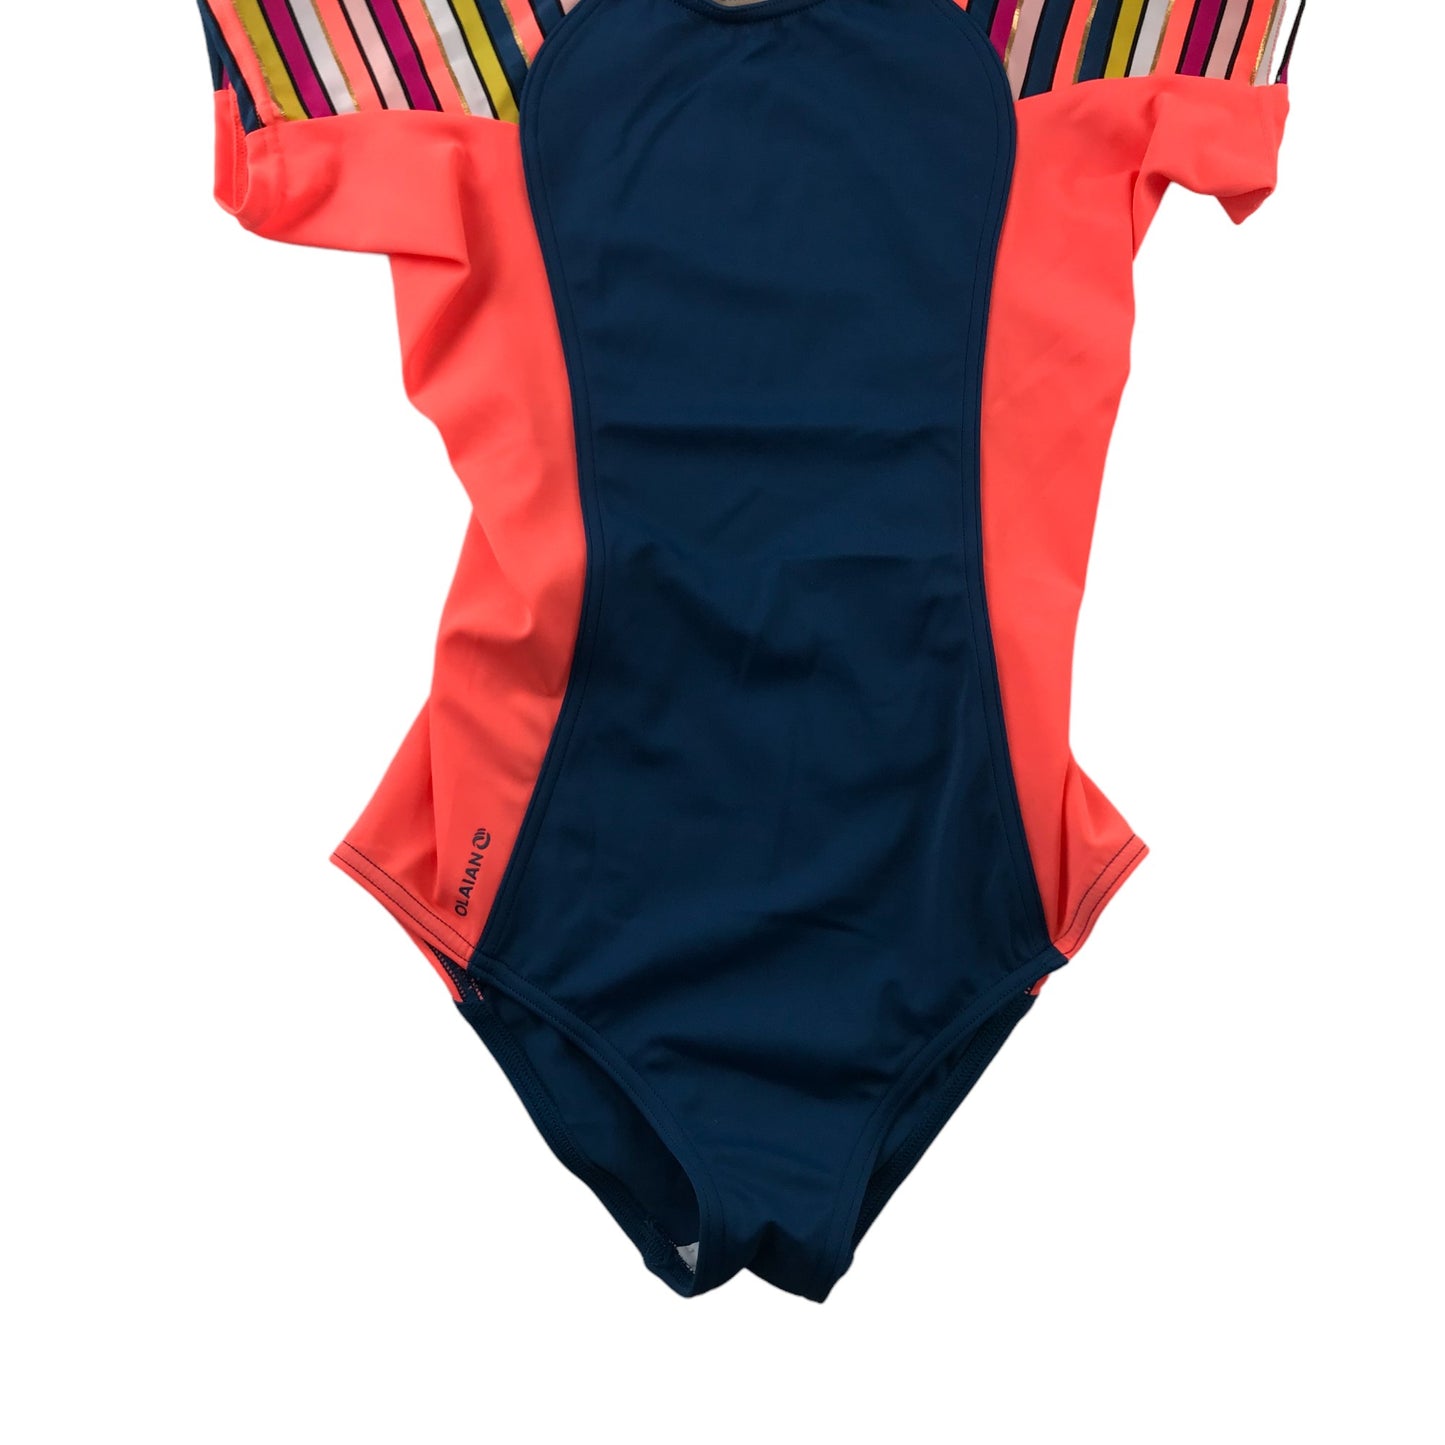 Decathlon Olaian Swimsuit Age 10 Navy Orange and Multicolour Stripy One Piece Cossie